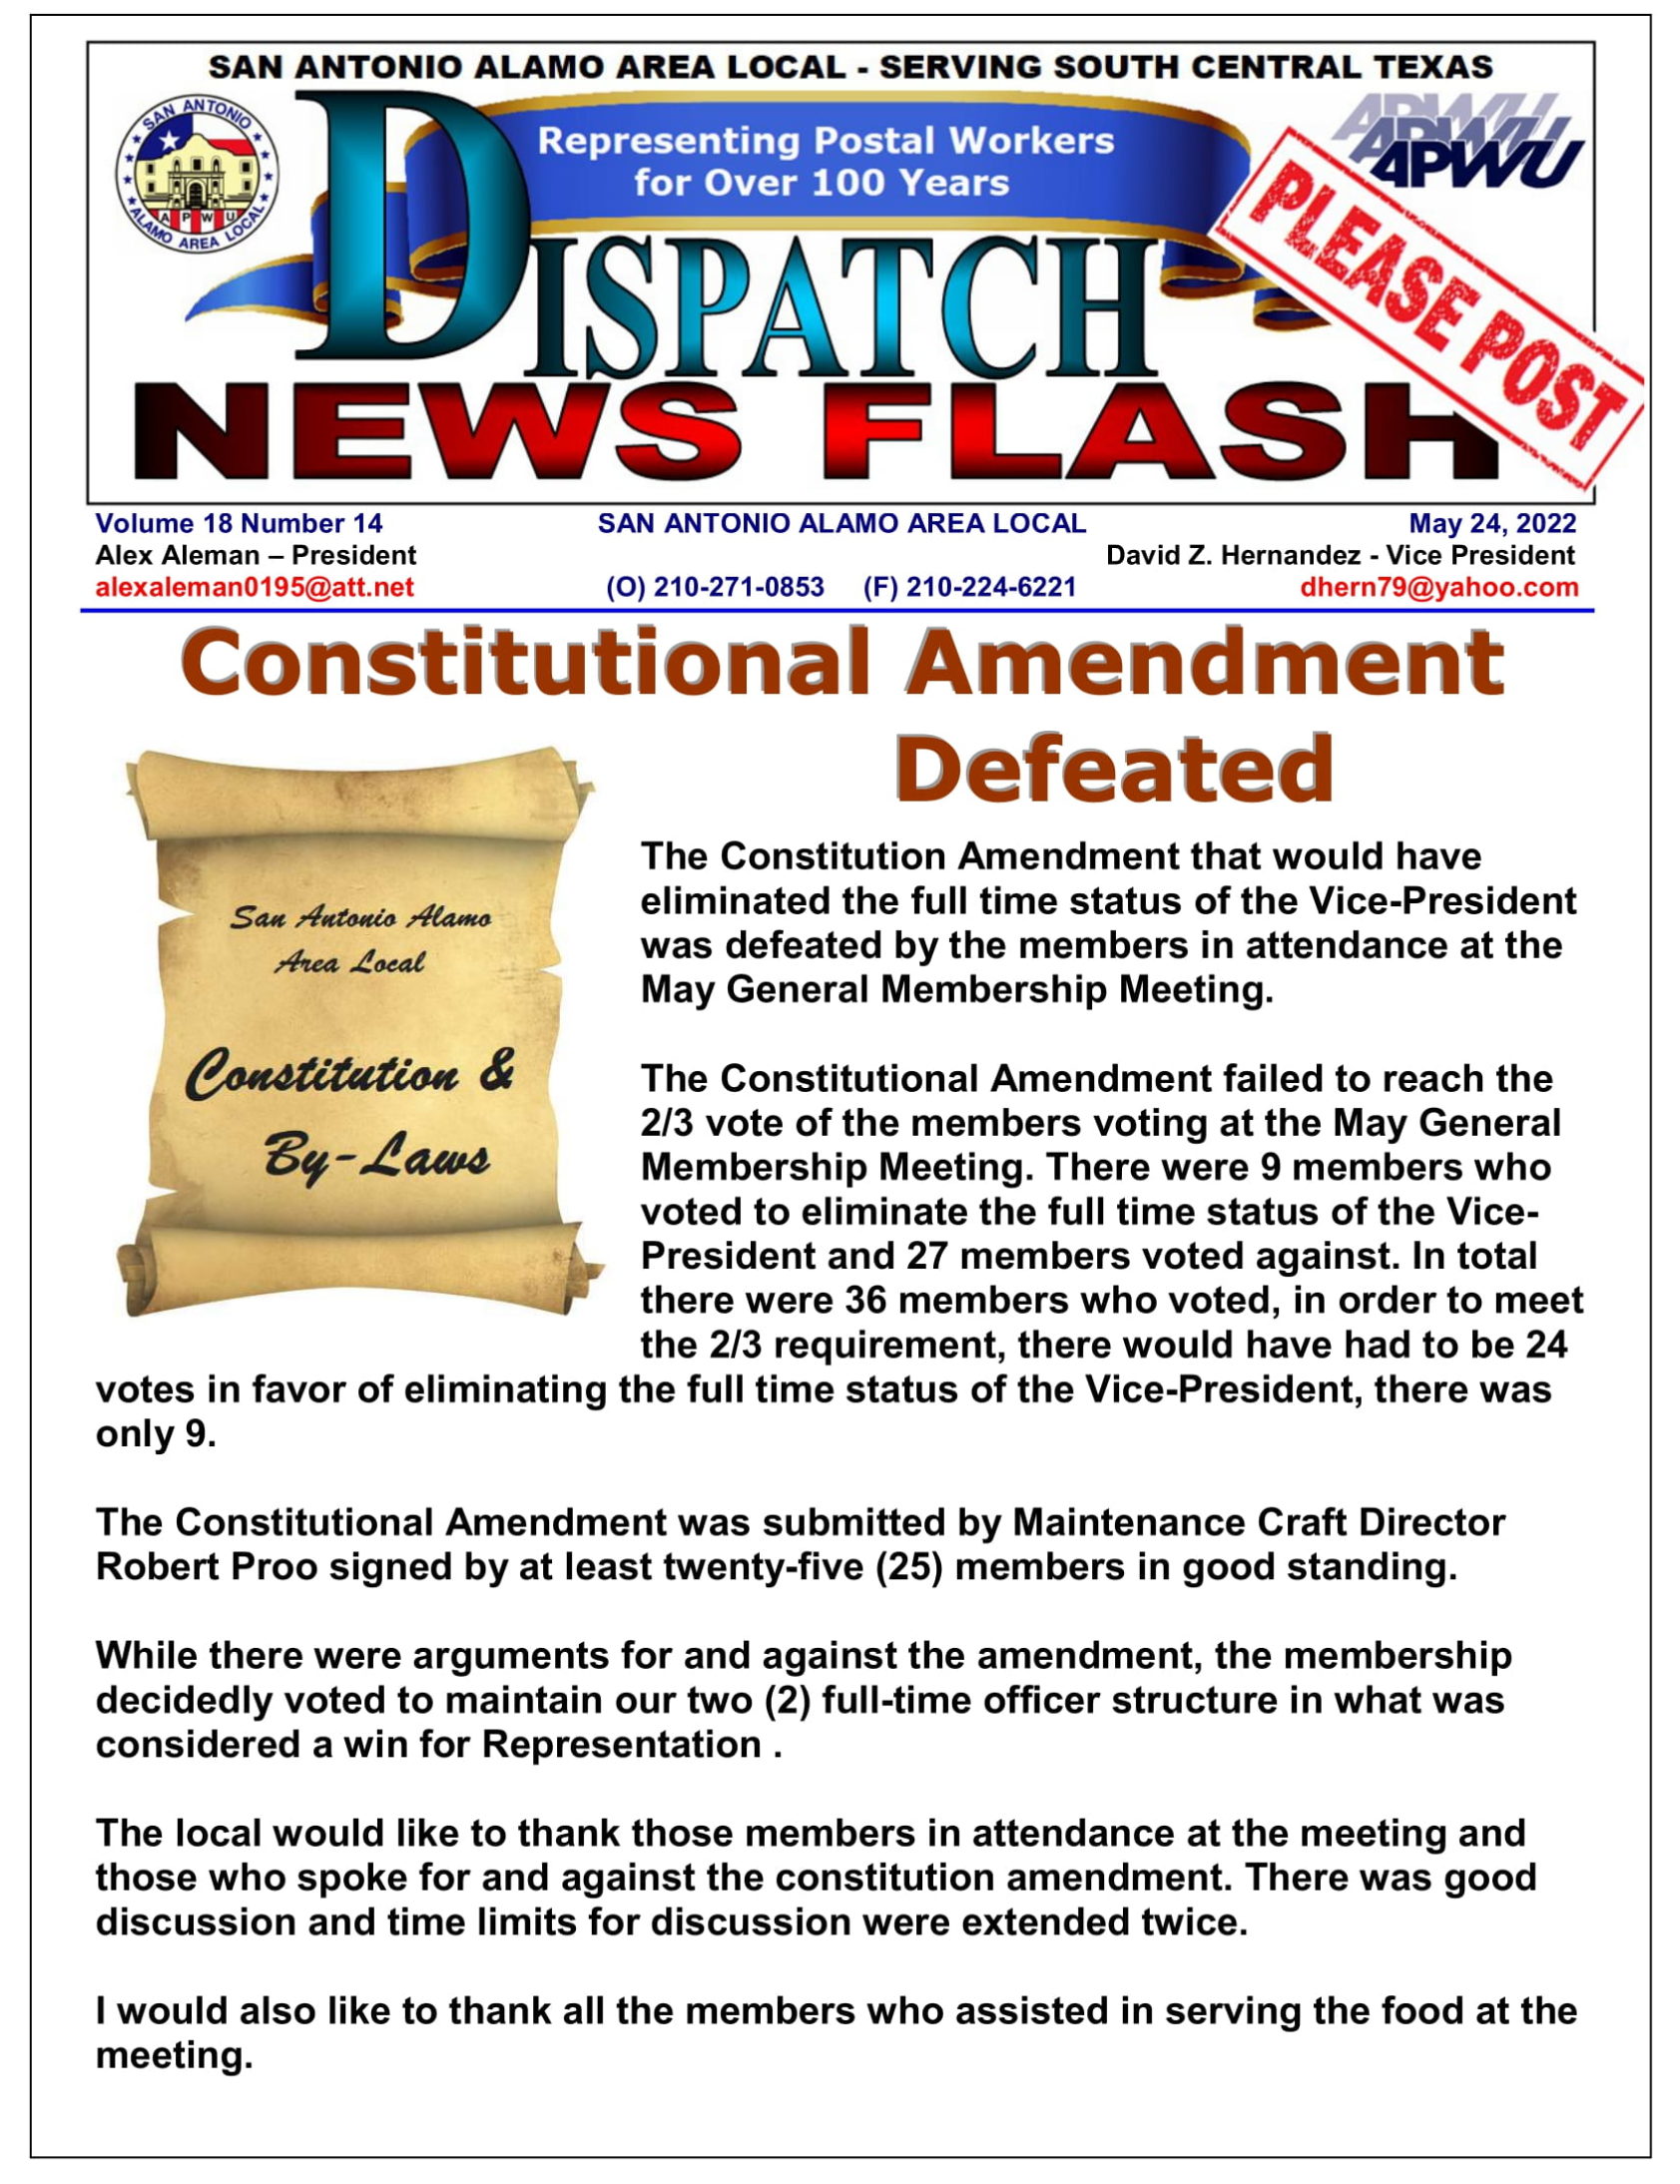 Constitutional Amendment Defeated - 